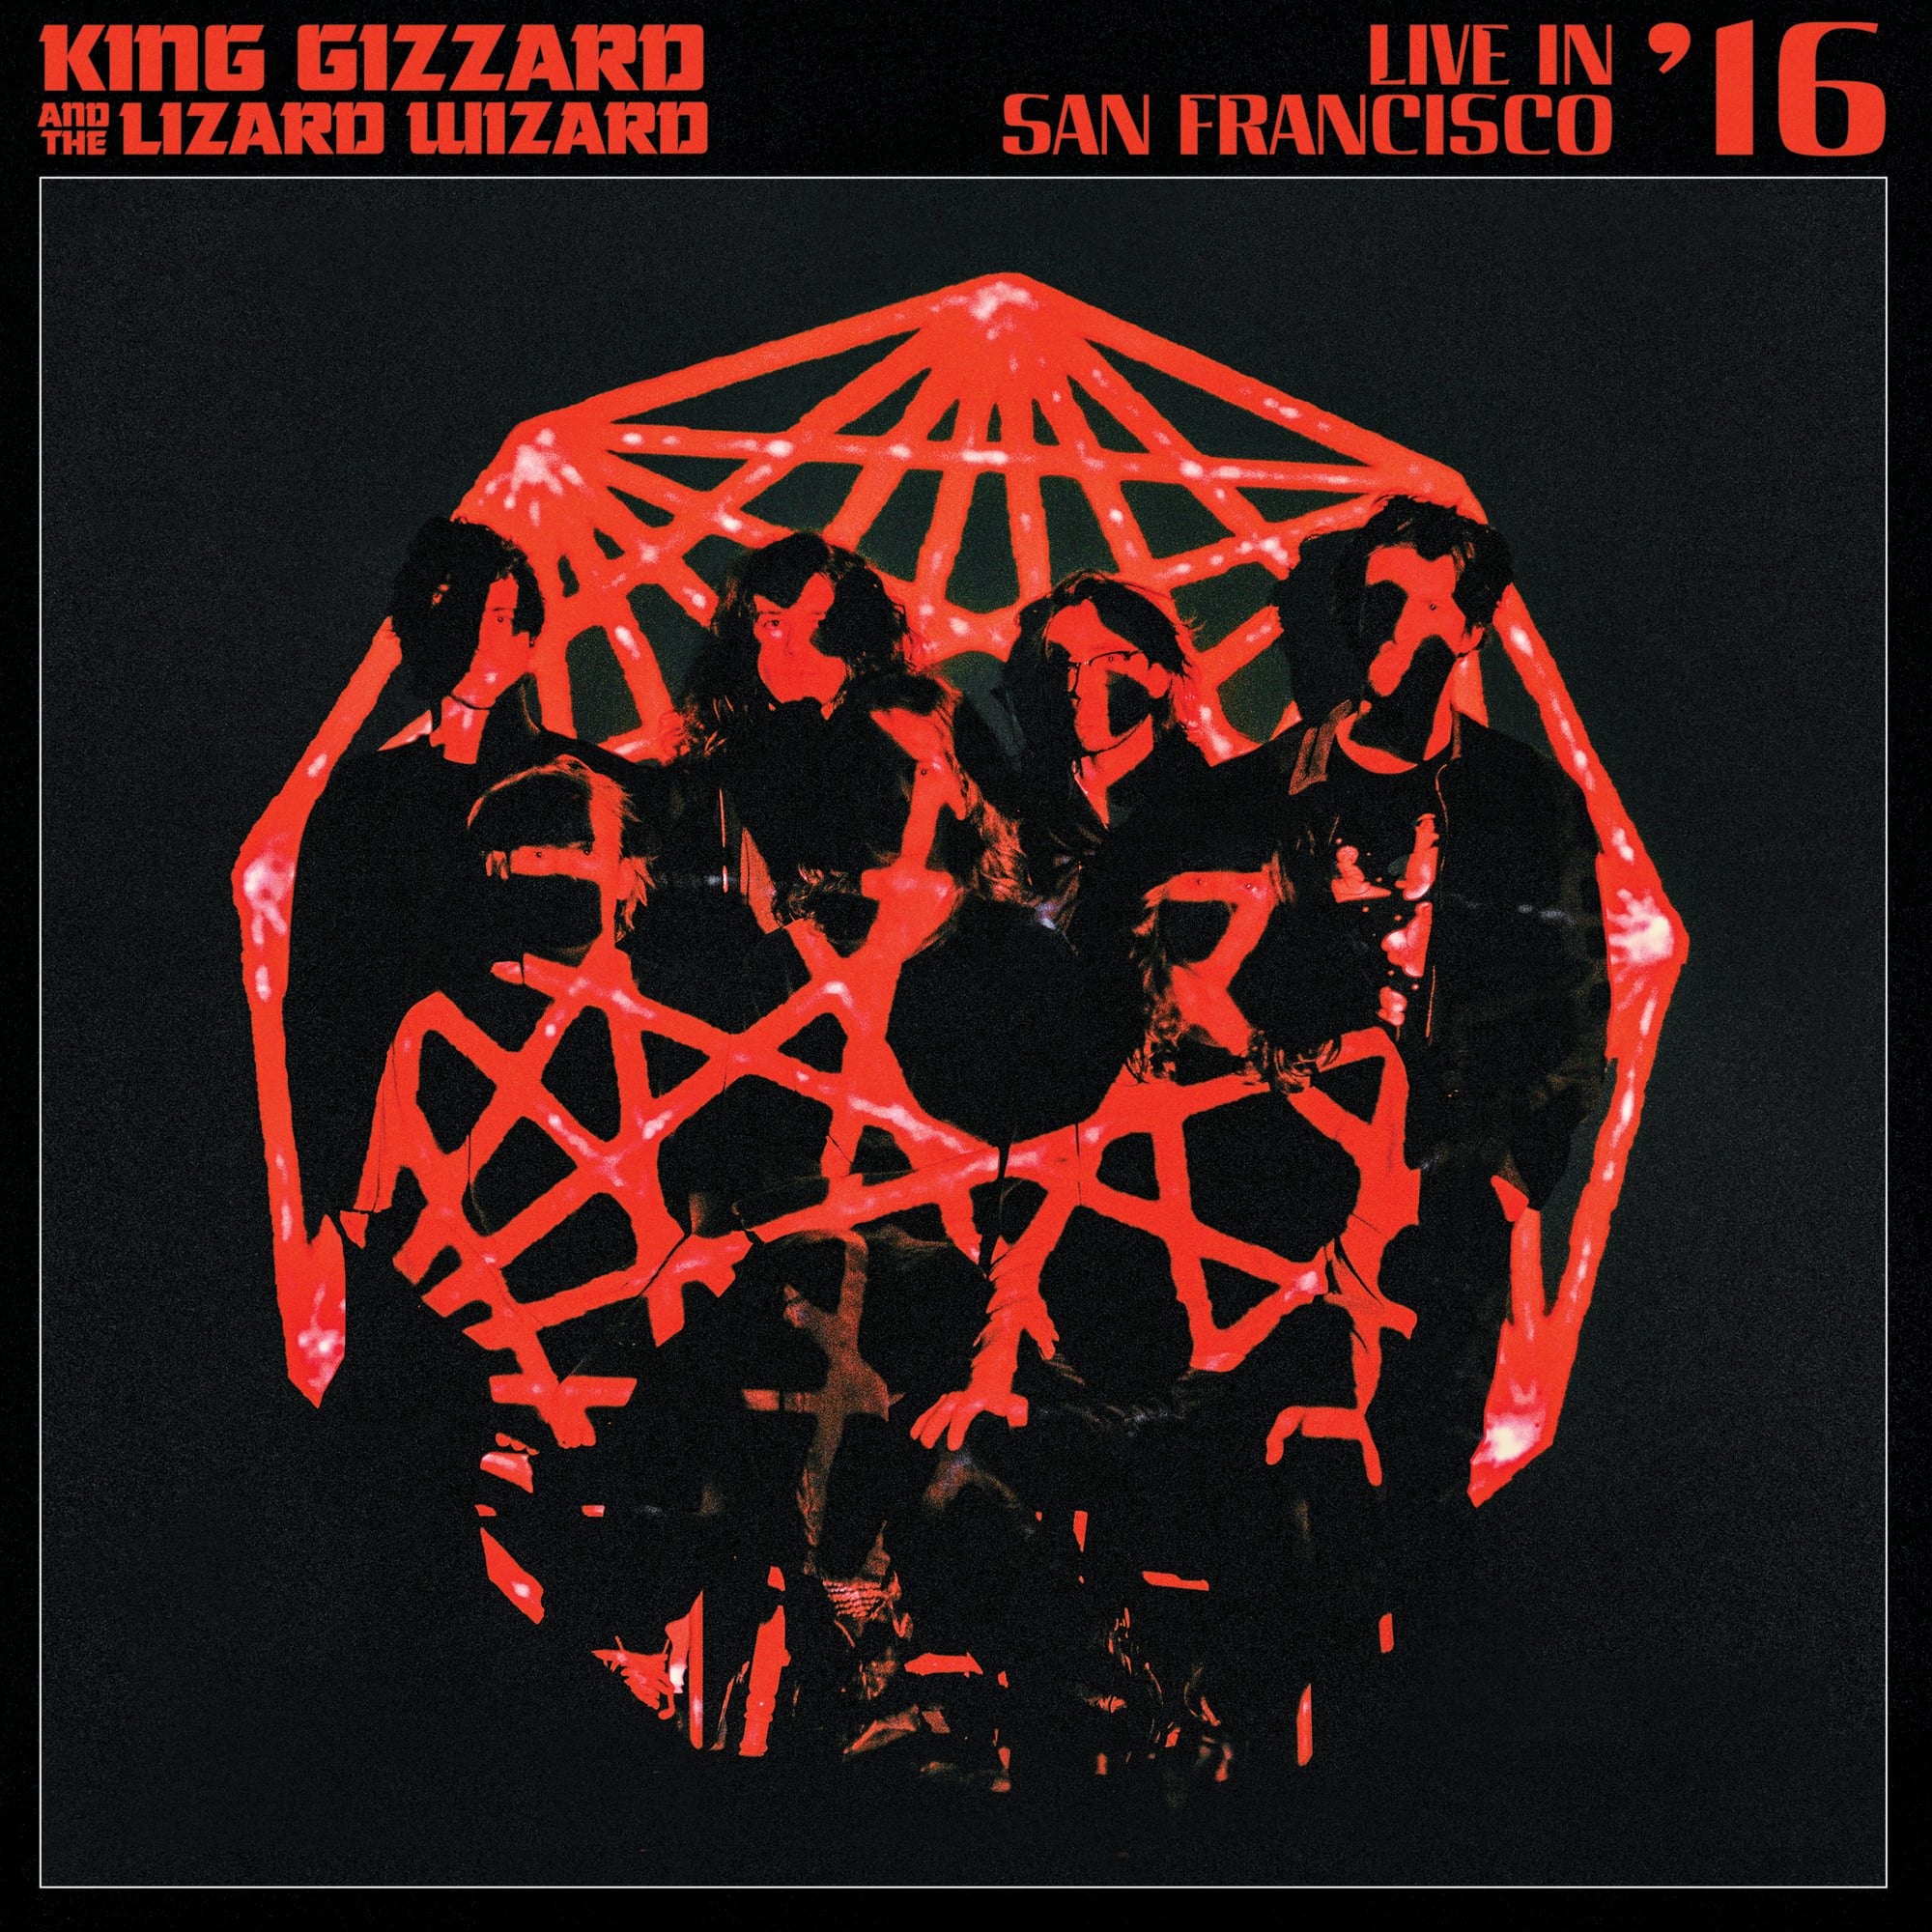 King Gizzard & The Lizard Wizard live in sf